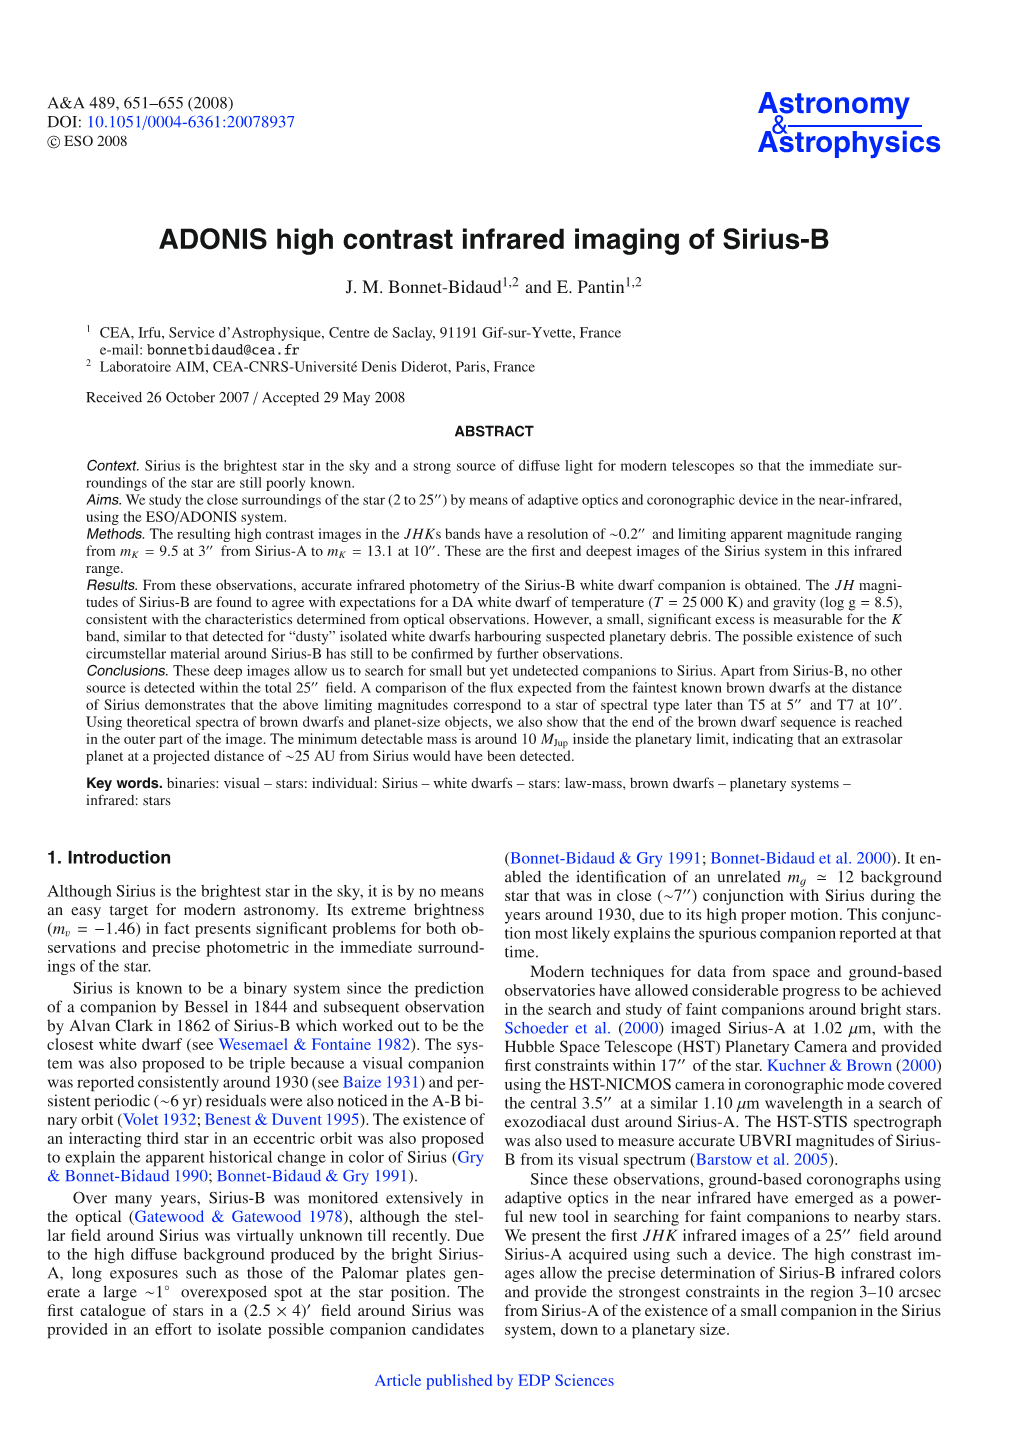 ADONIS High Contrast Infrared Imaging of Sirius-B